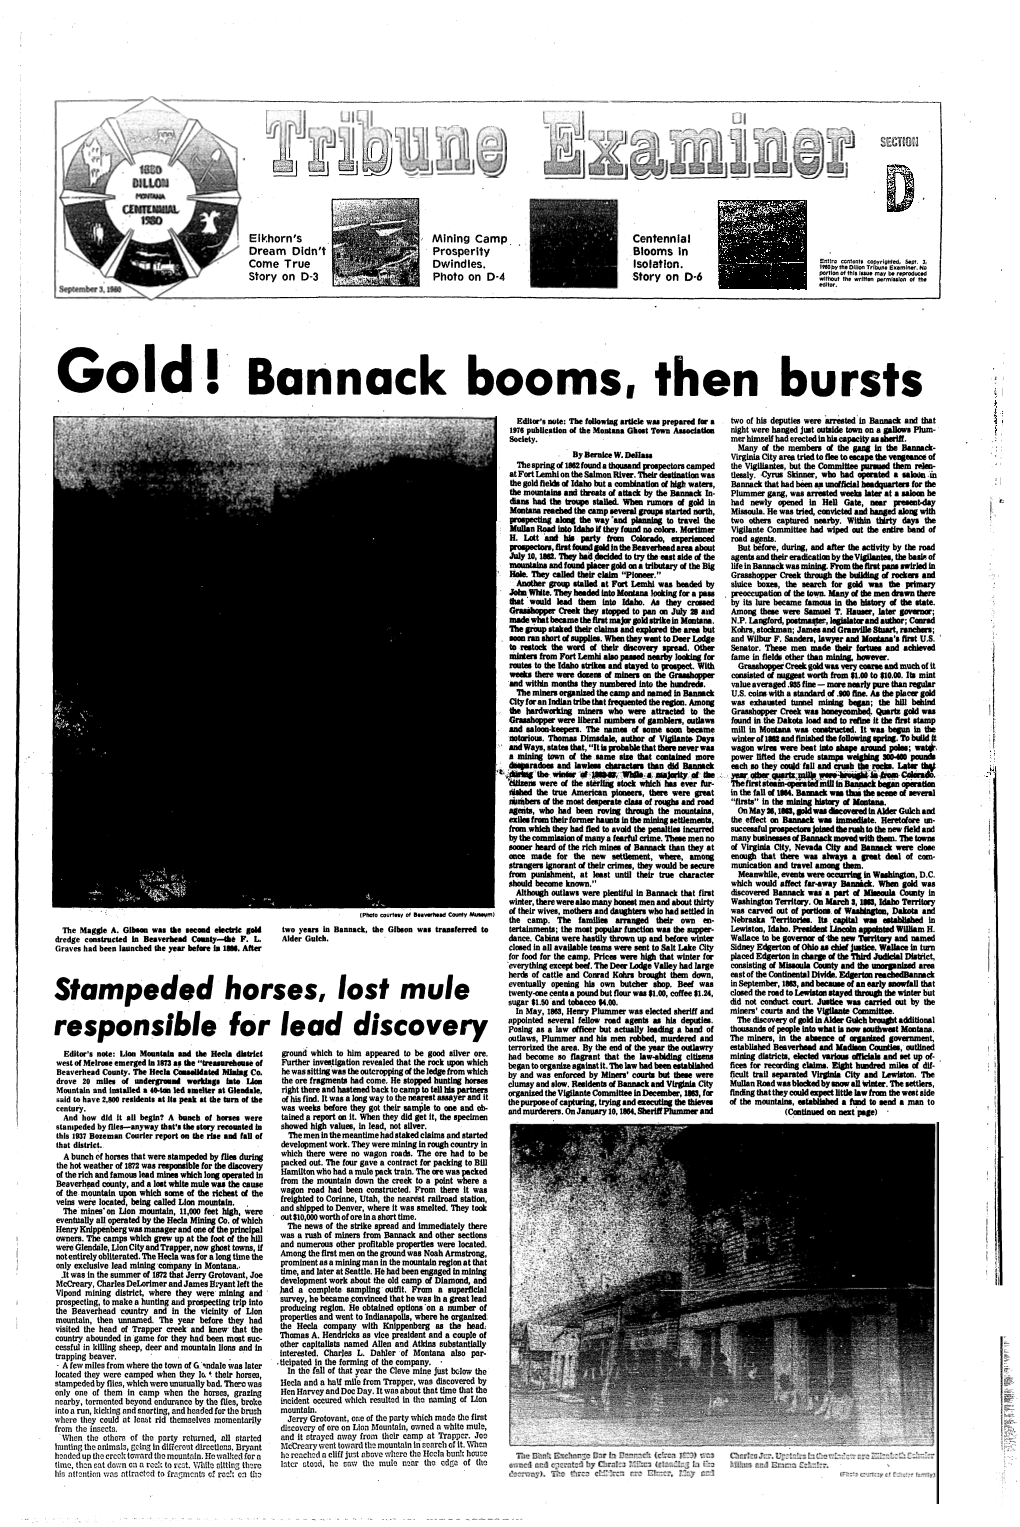 Gold! Bannock Booms, Then Bursts - I Í